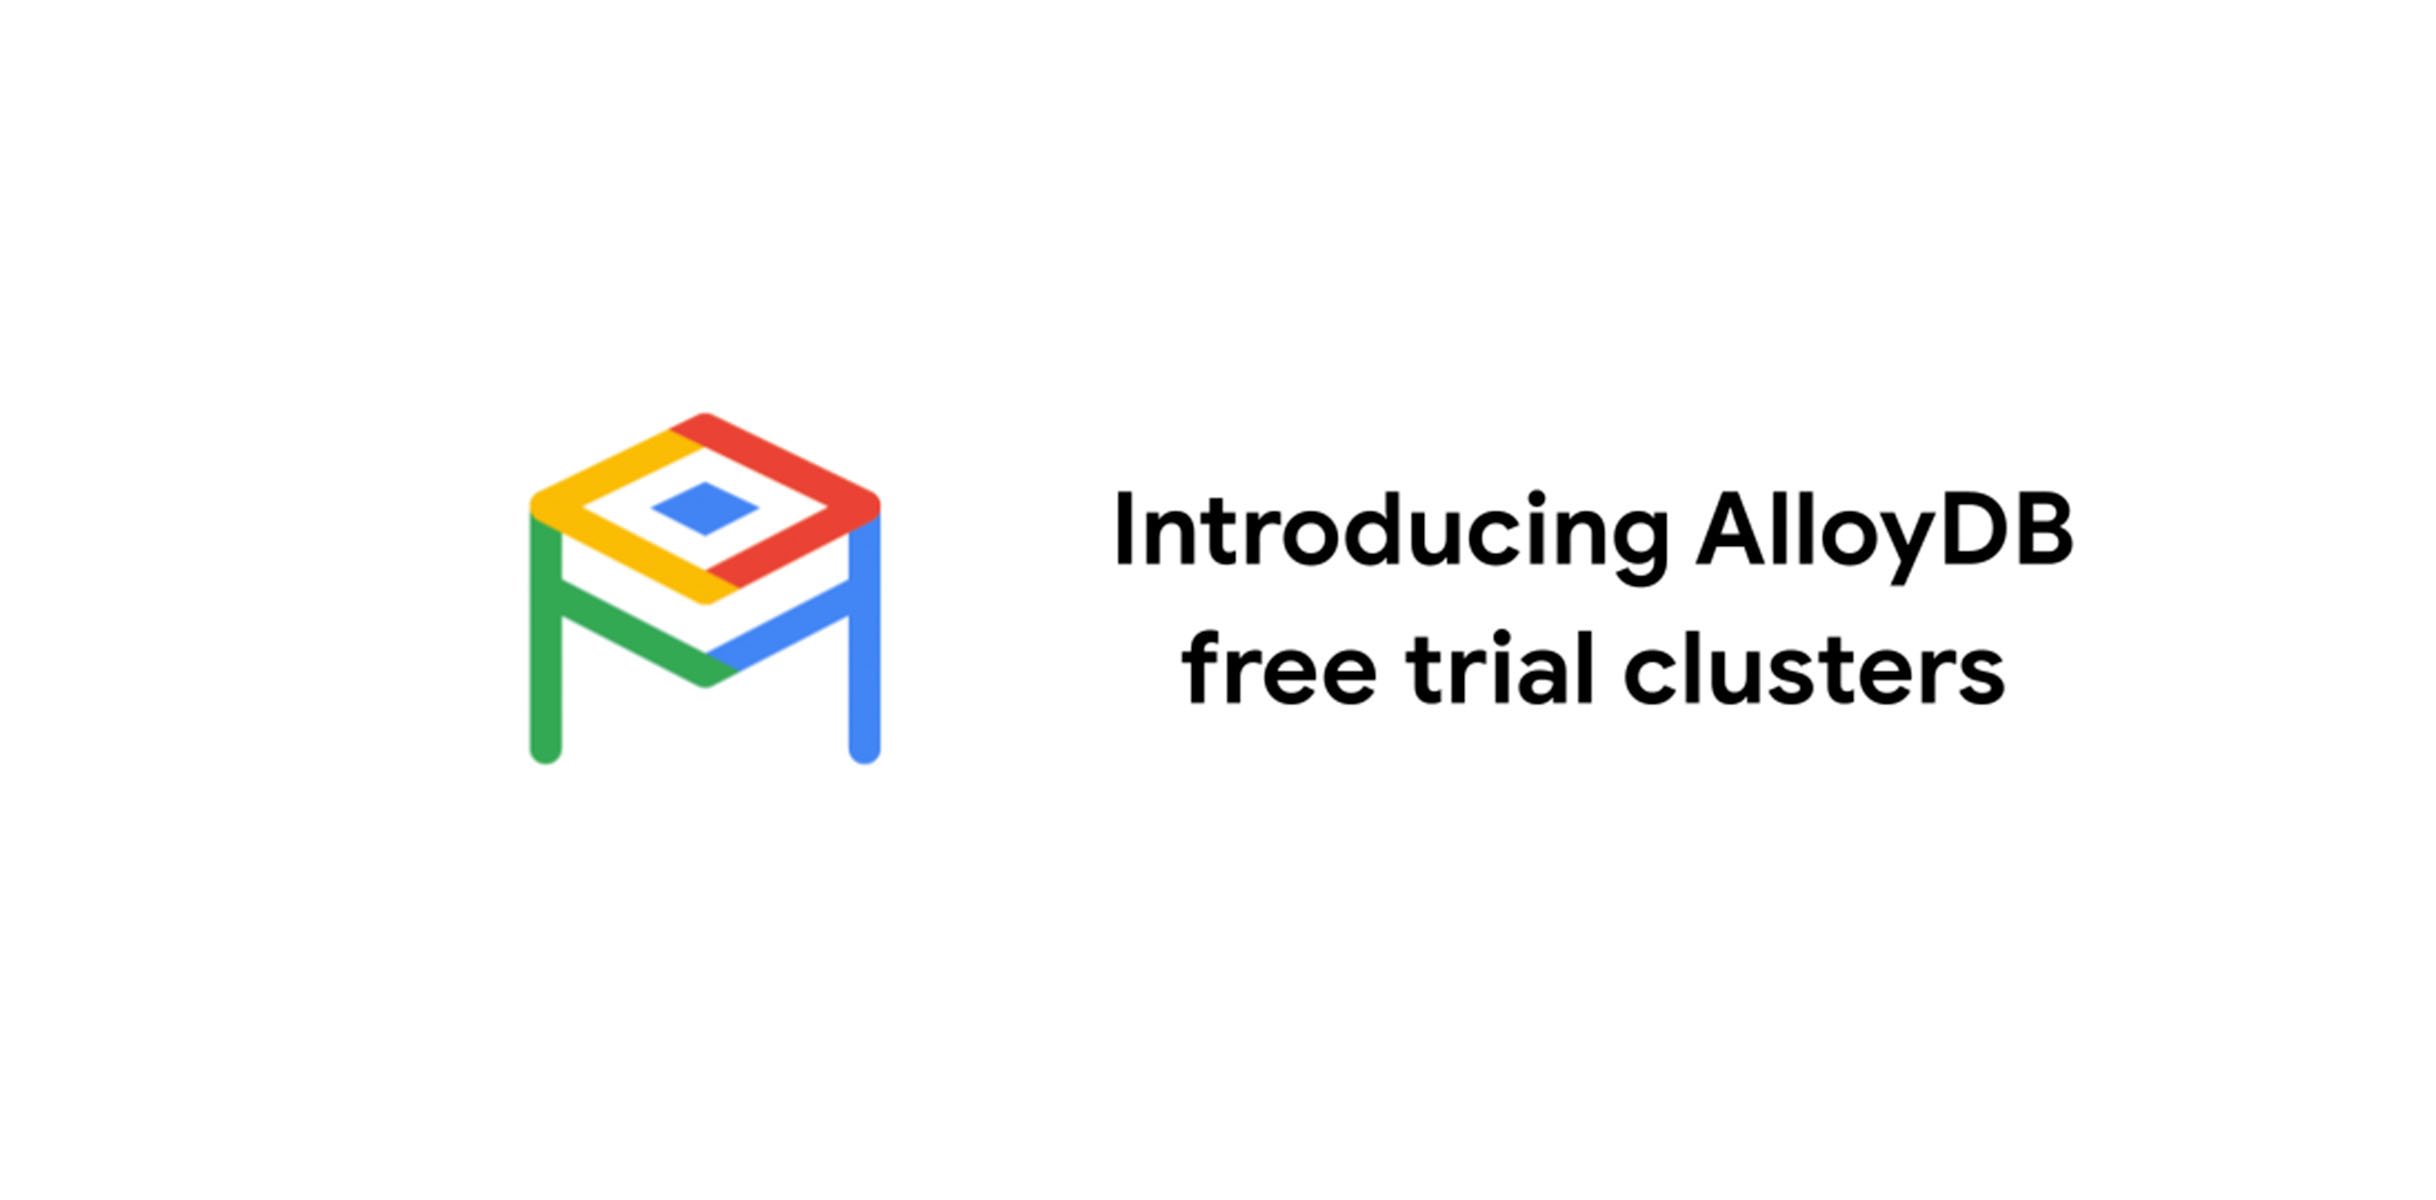 https://storage.googleapis.com/gweb-cloudblog-publish/images/AlloyDB_Free_Trial_Cluster.max-2500x2500.jpg